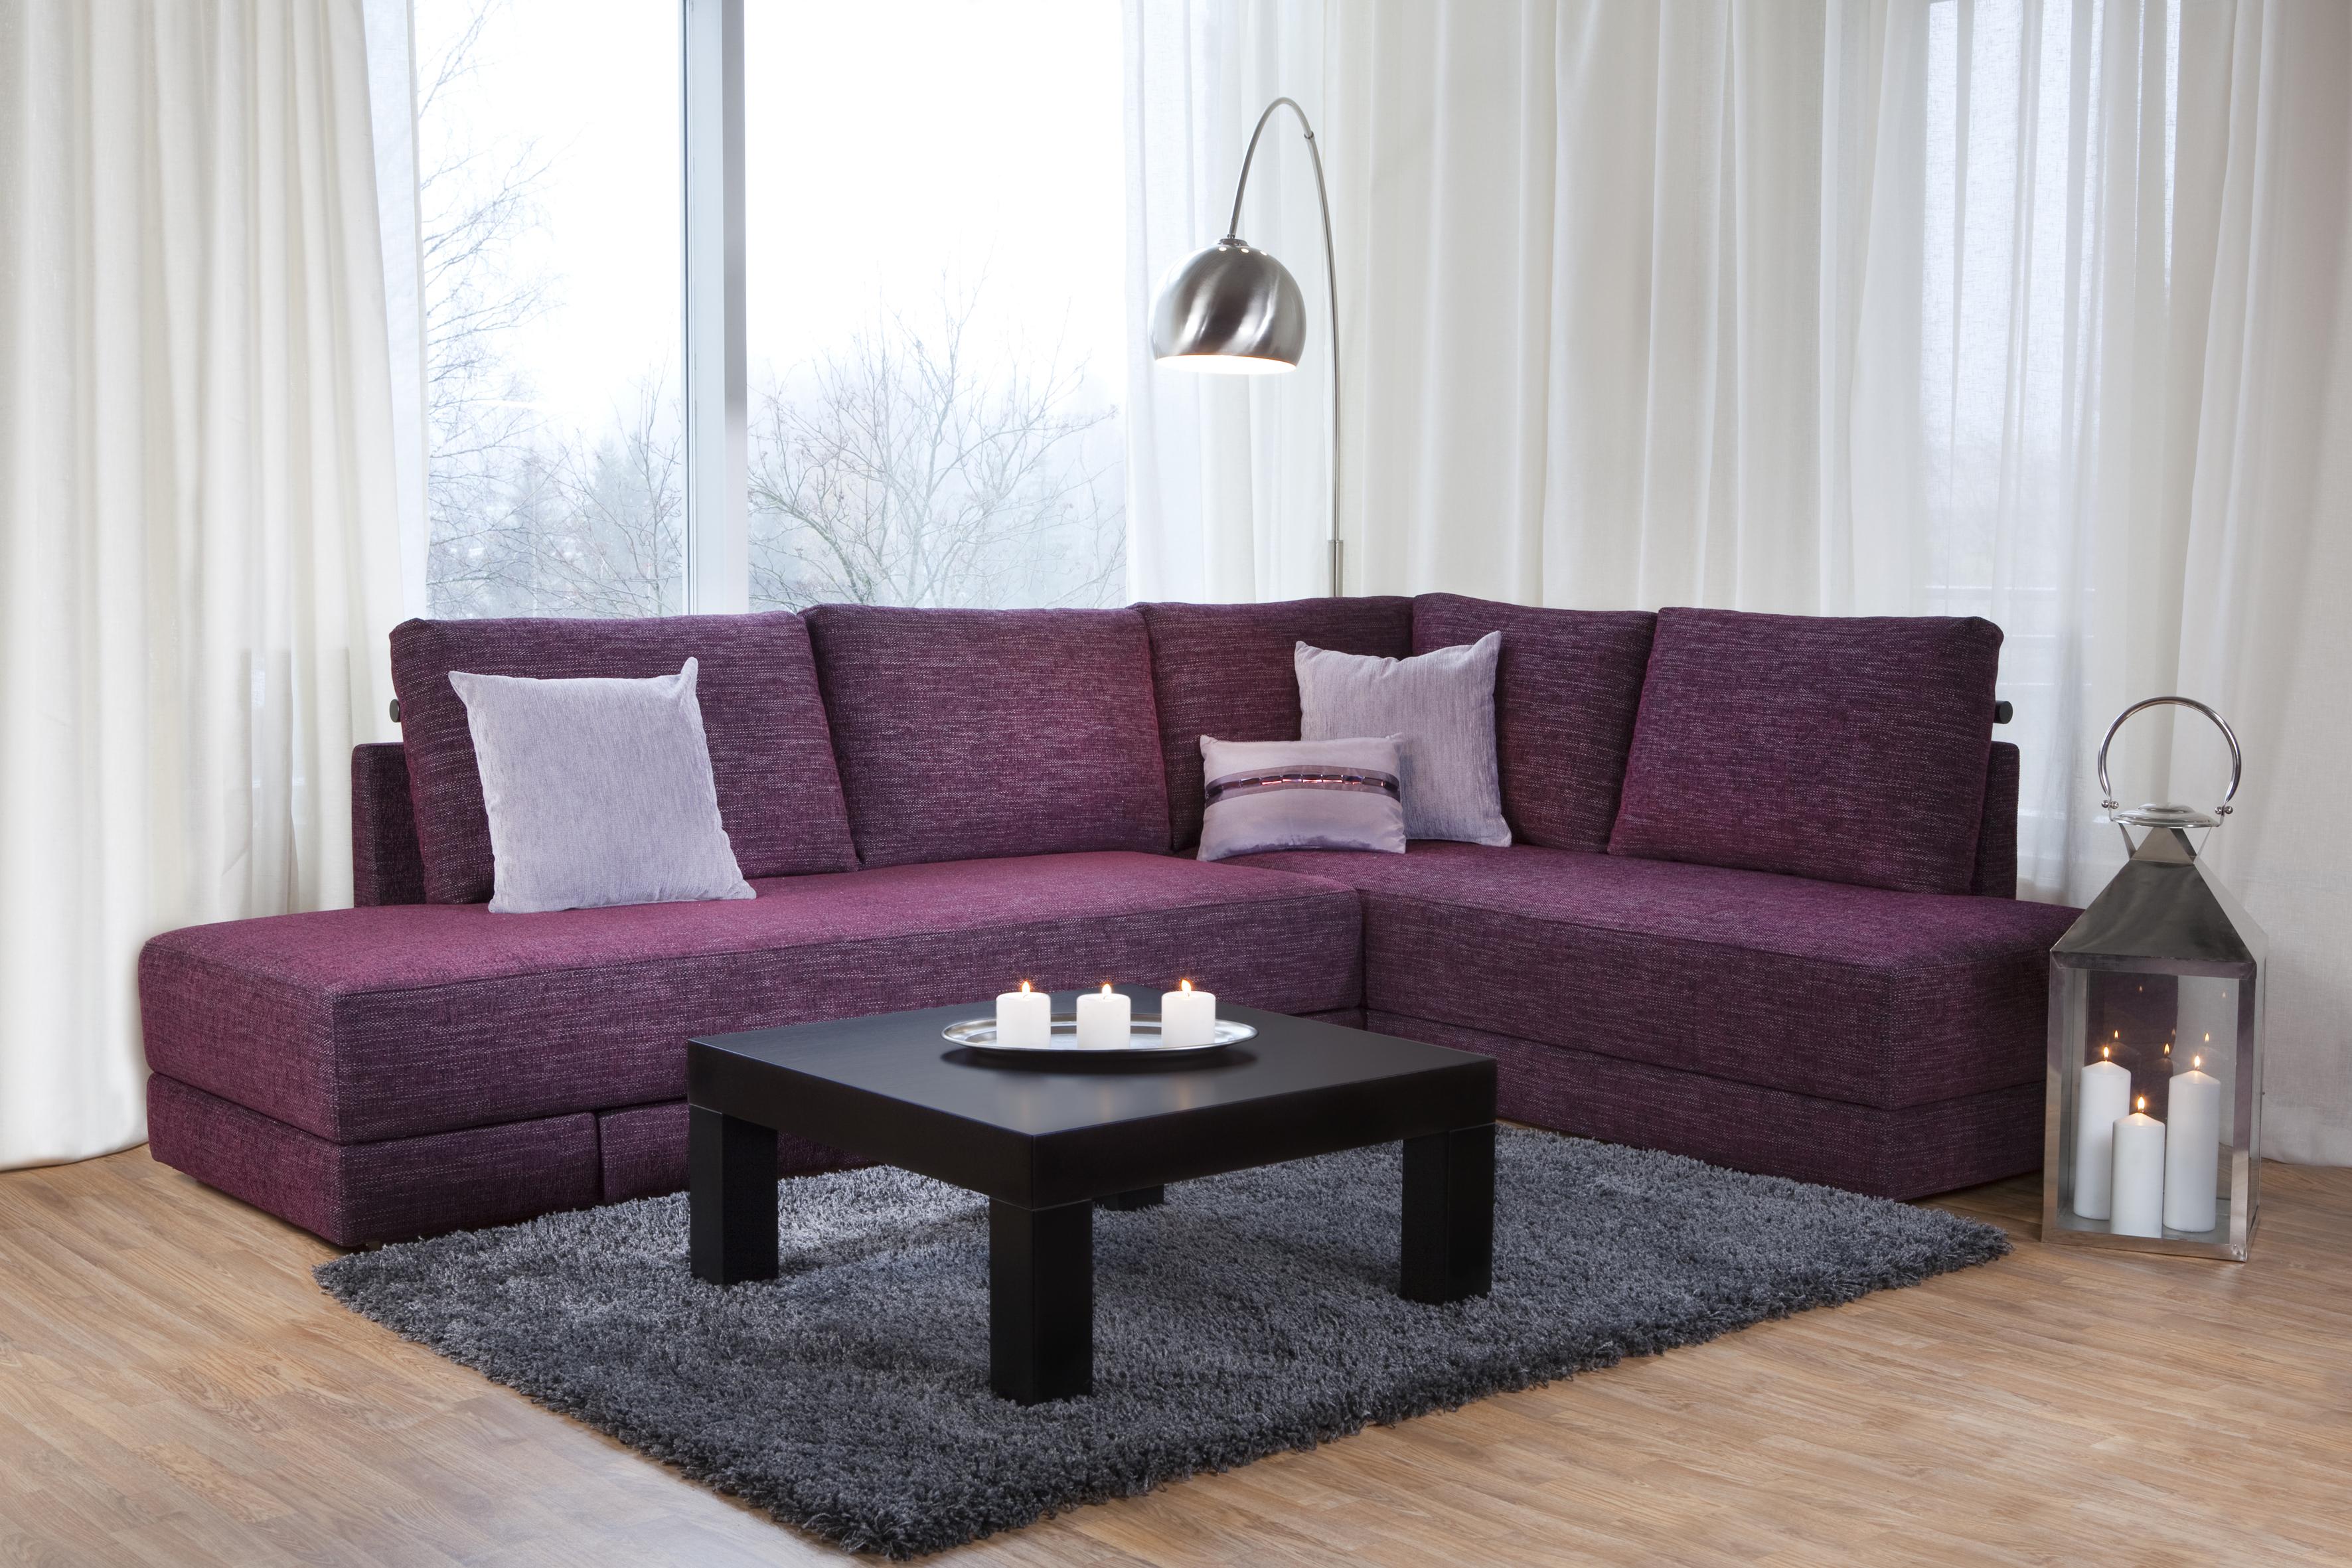 dark corner sofa in the design of the living room